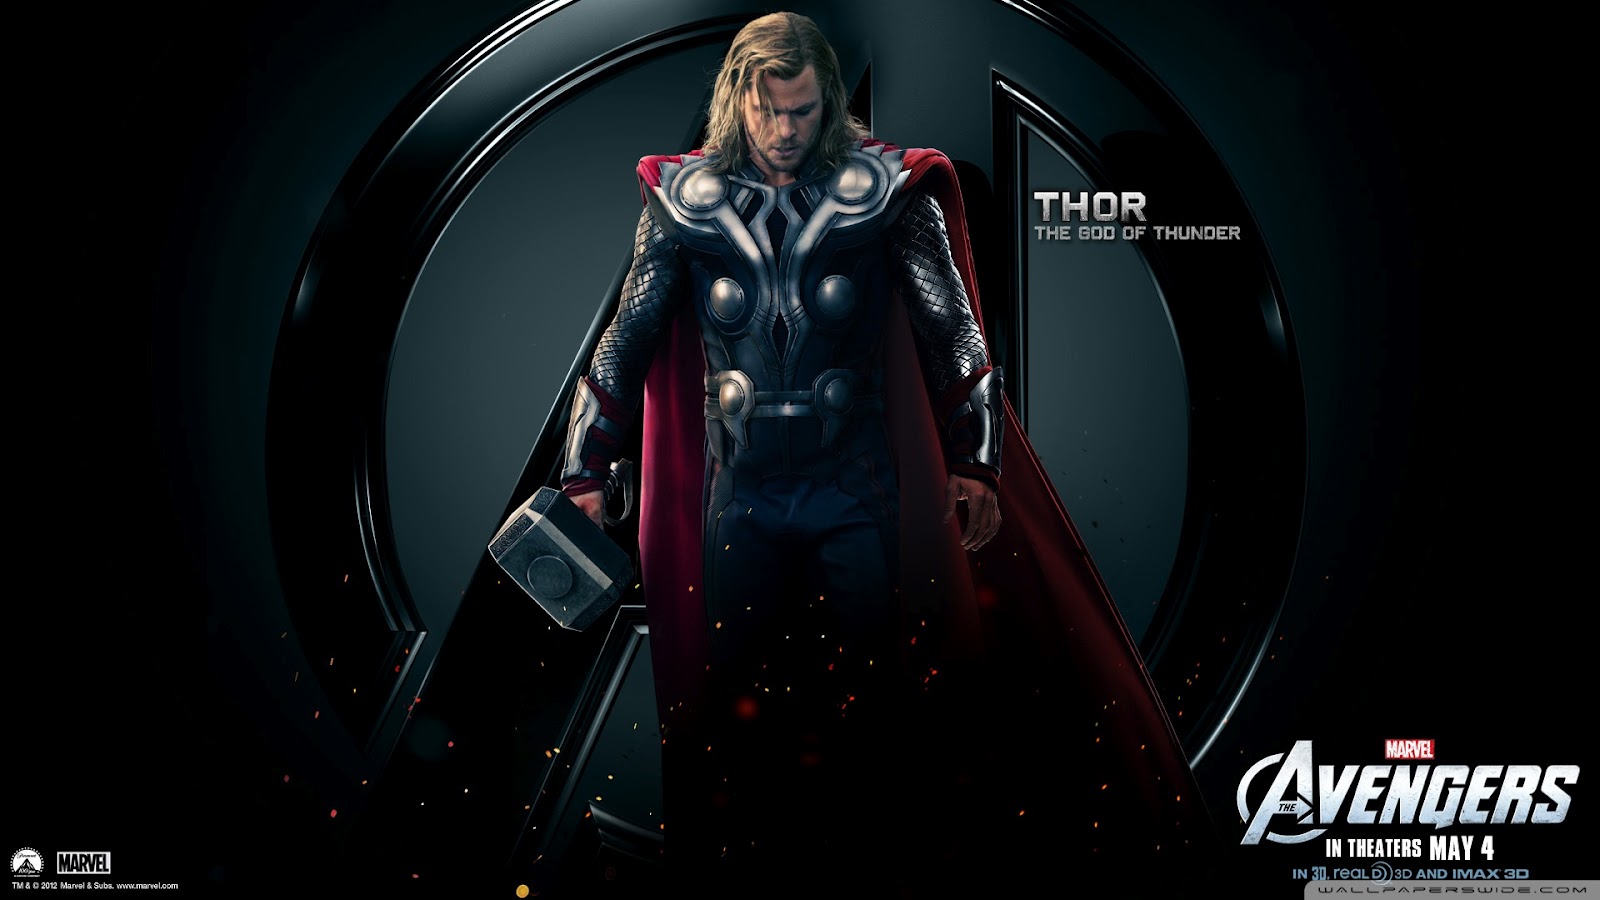 Marvel's the Avengers Movie 2012 (Marvel Avengers Assemble in the UK) is Chris Hemsworth as Thor Character the Avengers Movie 2012 are Chris Hemsworth as Thor Character